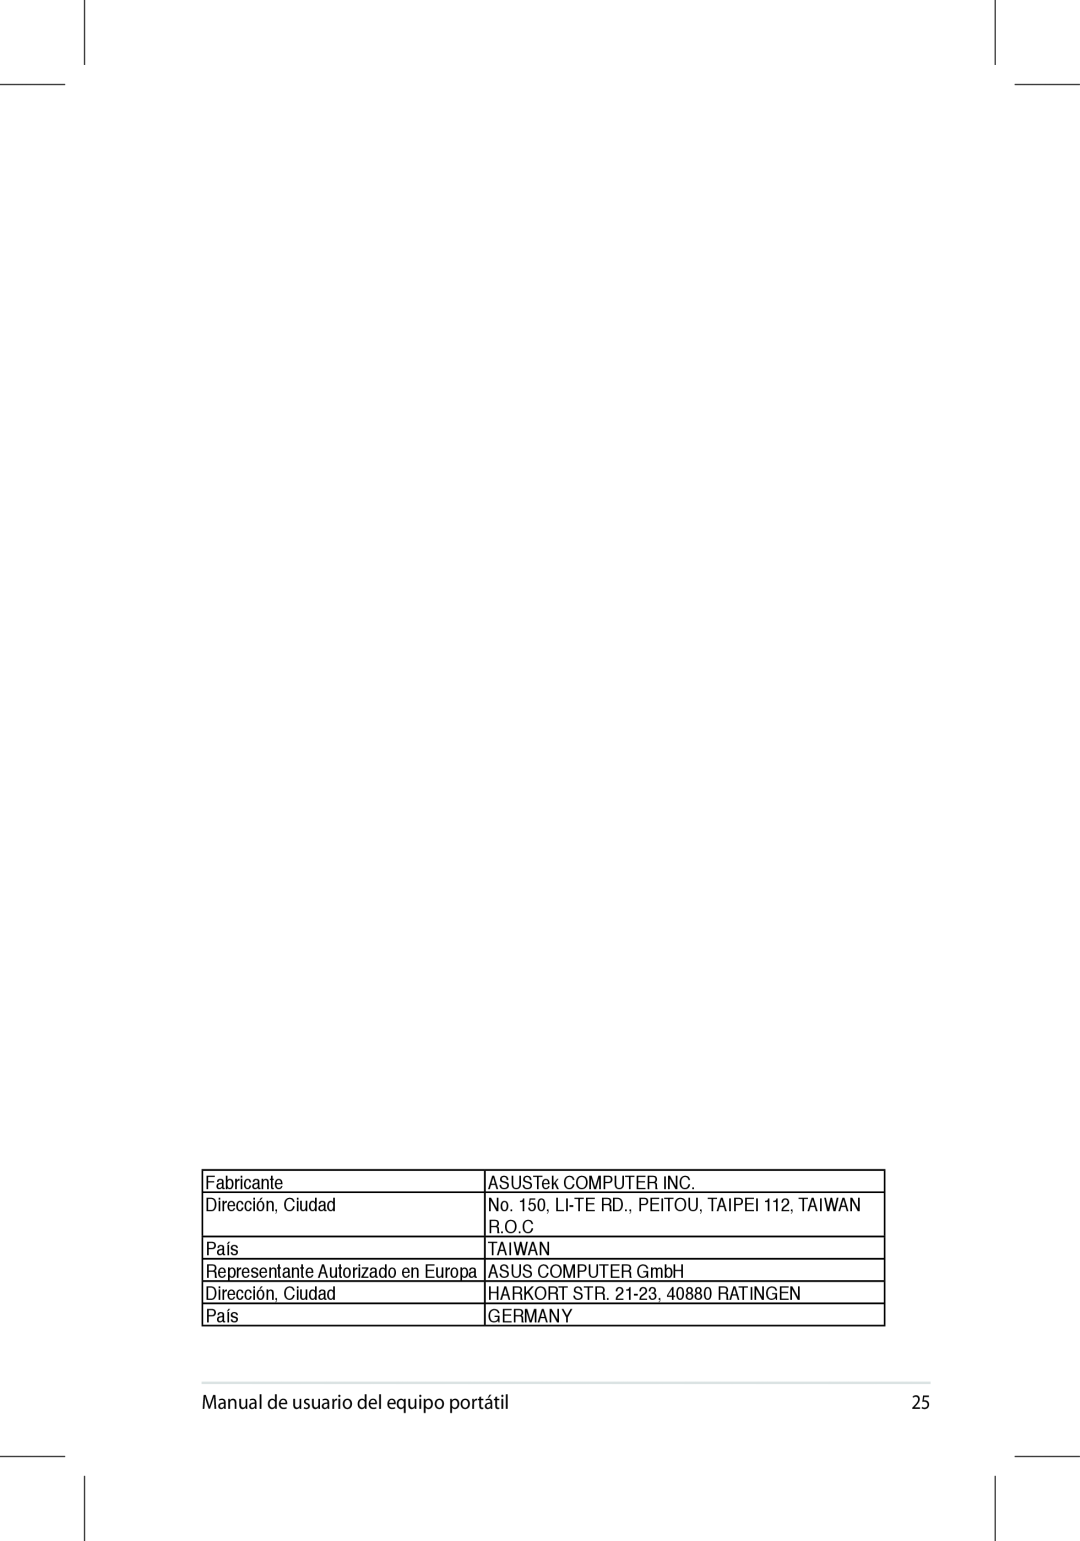 Asus UL50/PRO5G/X5G manual Manual de usuario del equipo portátil, No. 150, LI-TE RD., PEITOU, TAIPEI 112, TAIWAN 